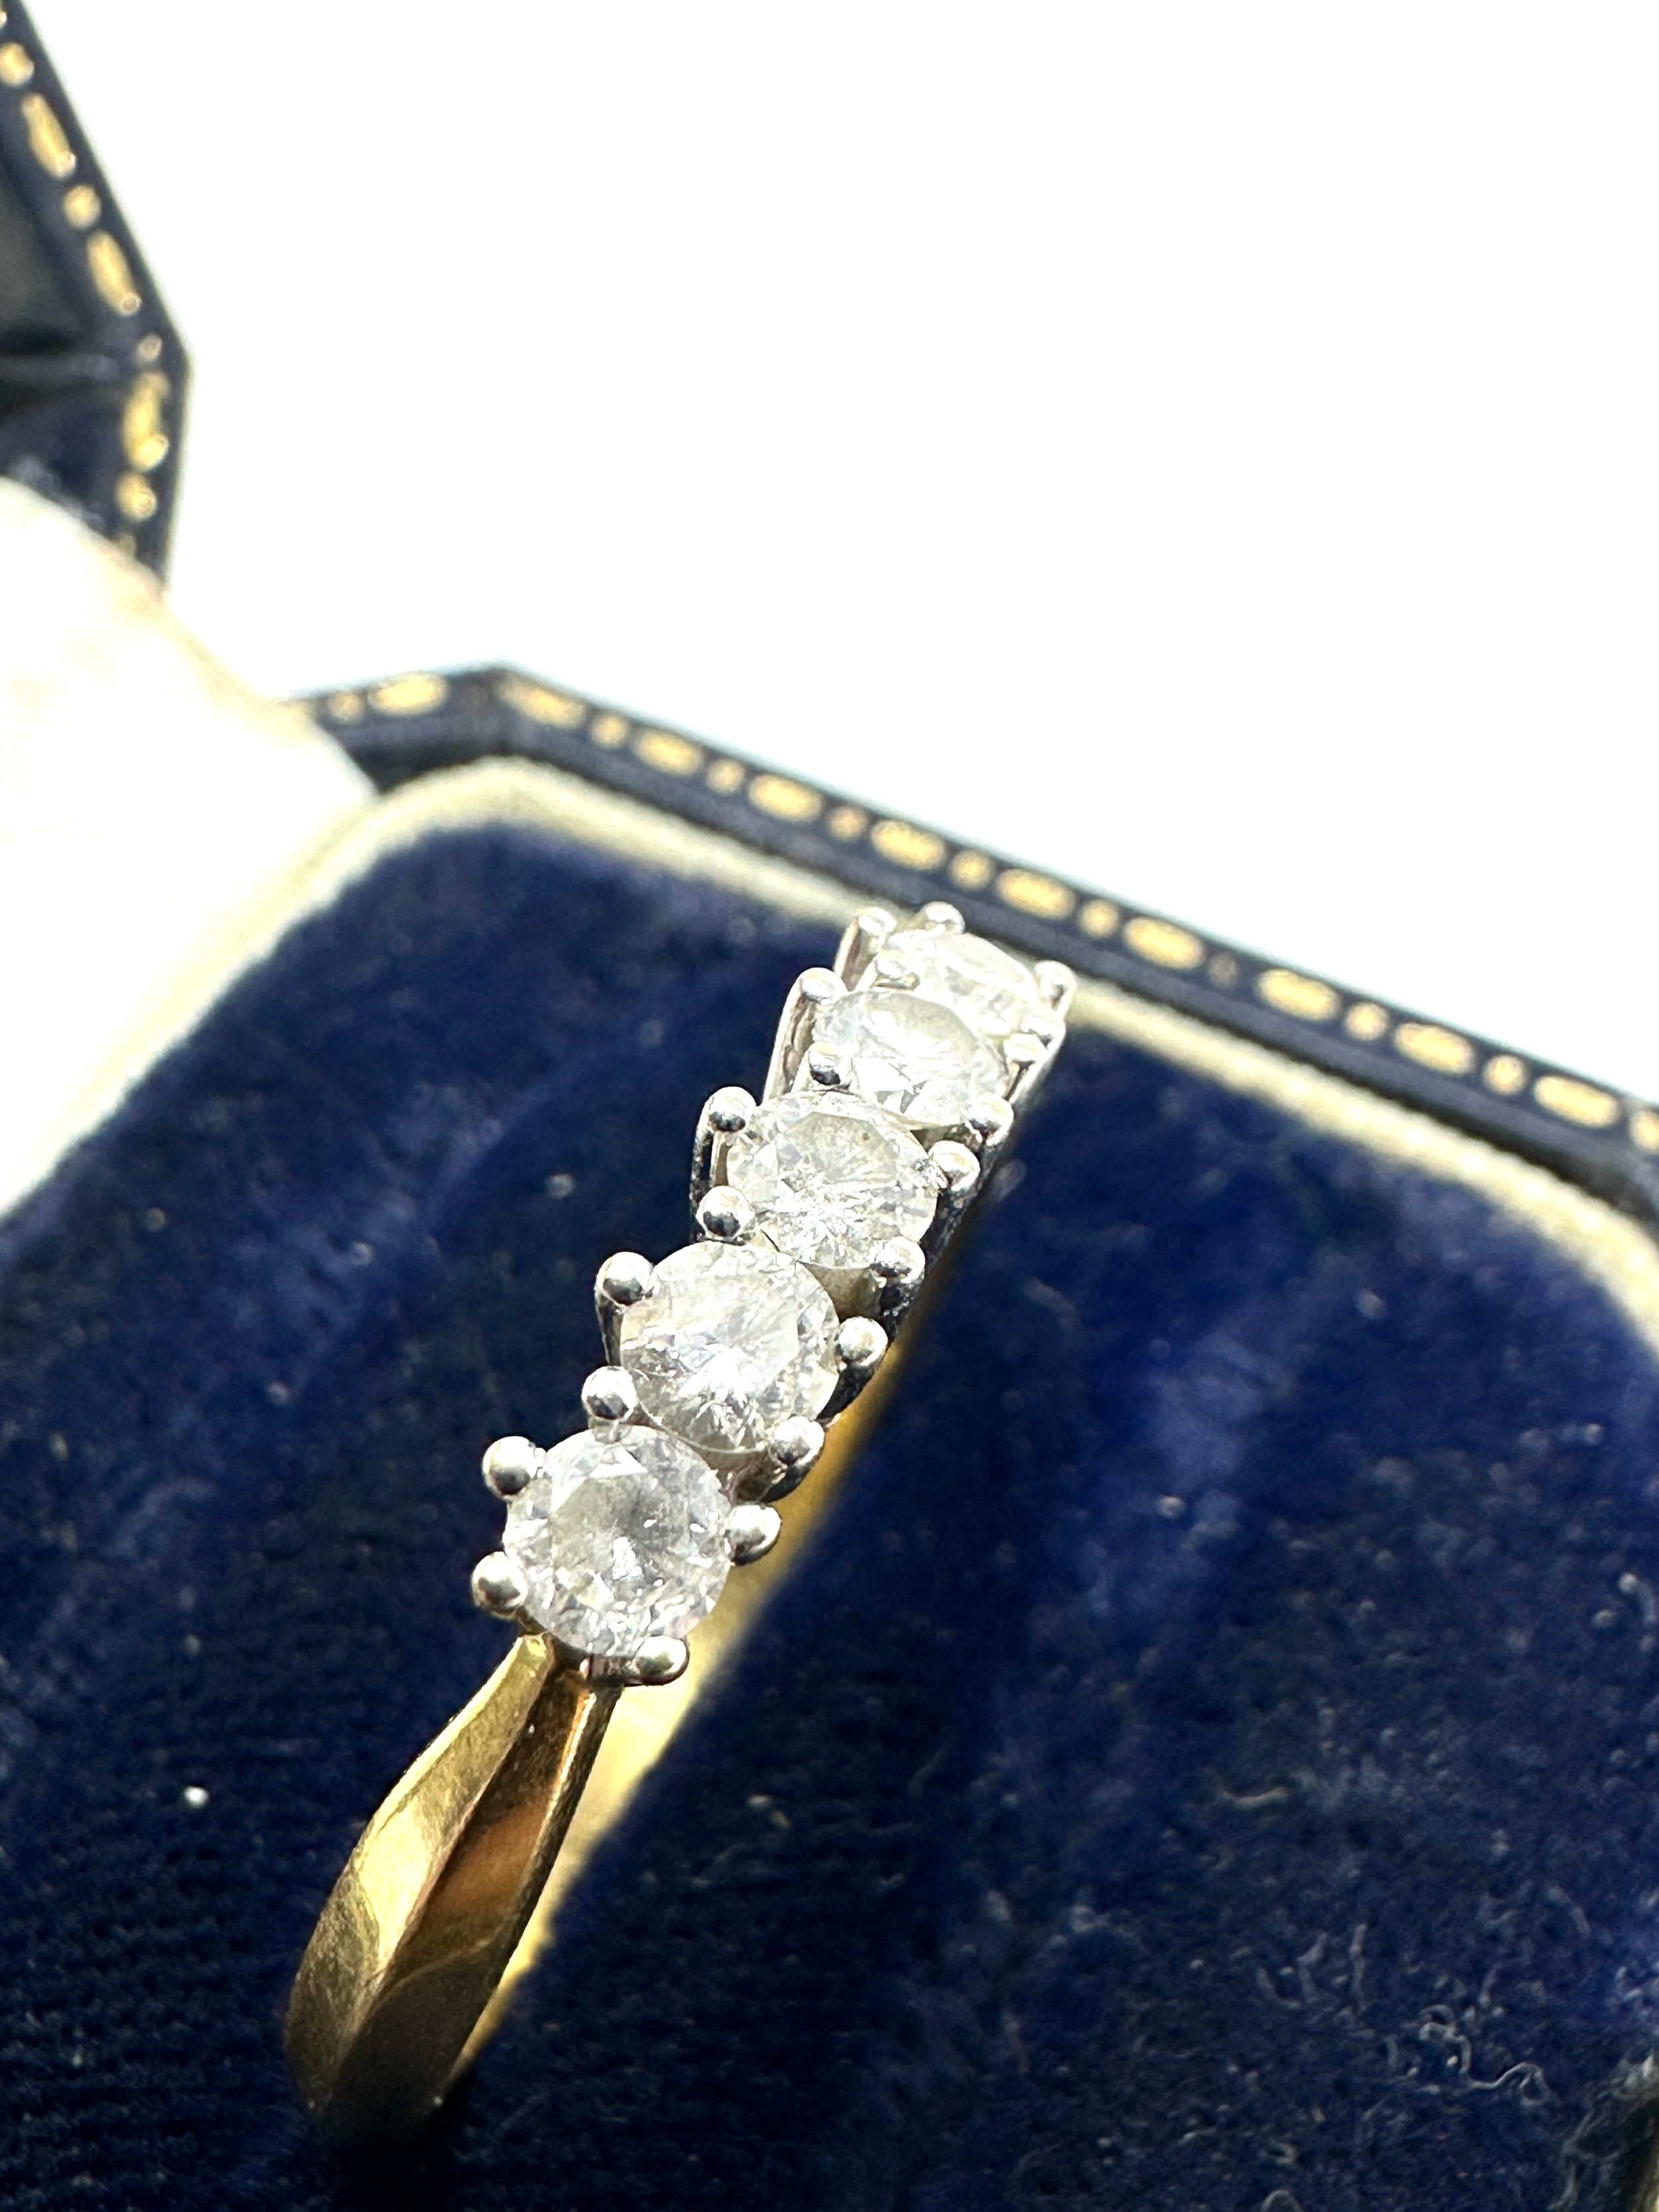 18ct gold 5 stone diamond ring 0.50 ct diamonds weight 3.3g - Image 2 of 4